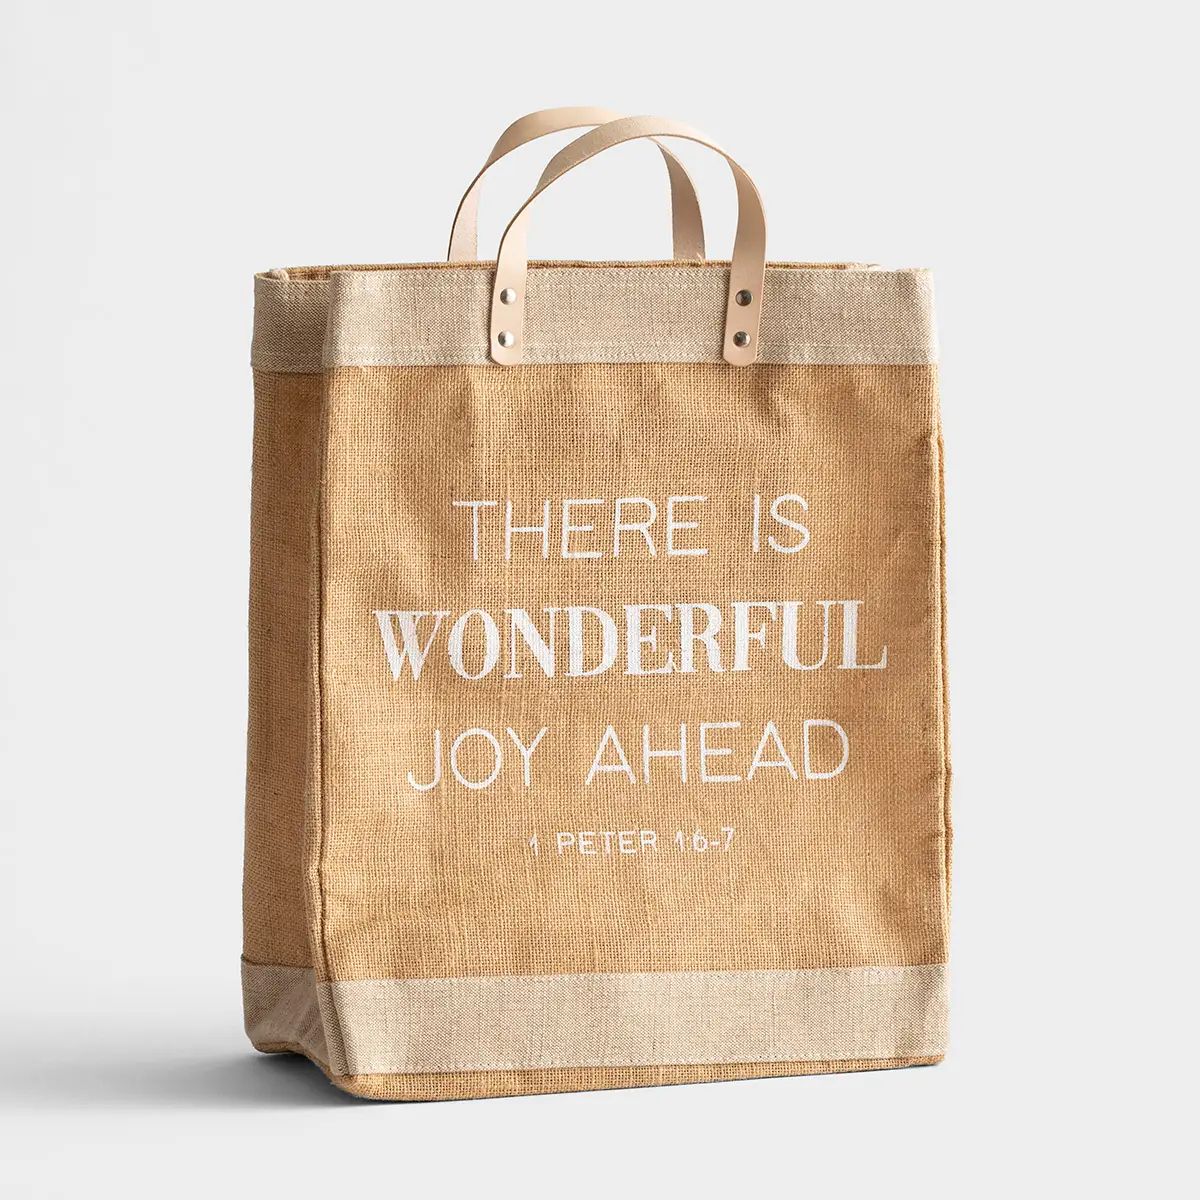 There Is Wonderful Joy Ahead - Market Jute Tote Bag | DaySpring